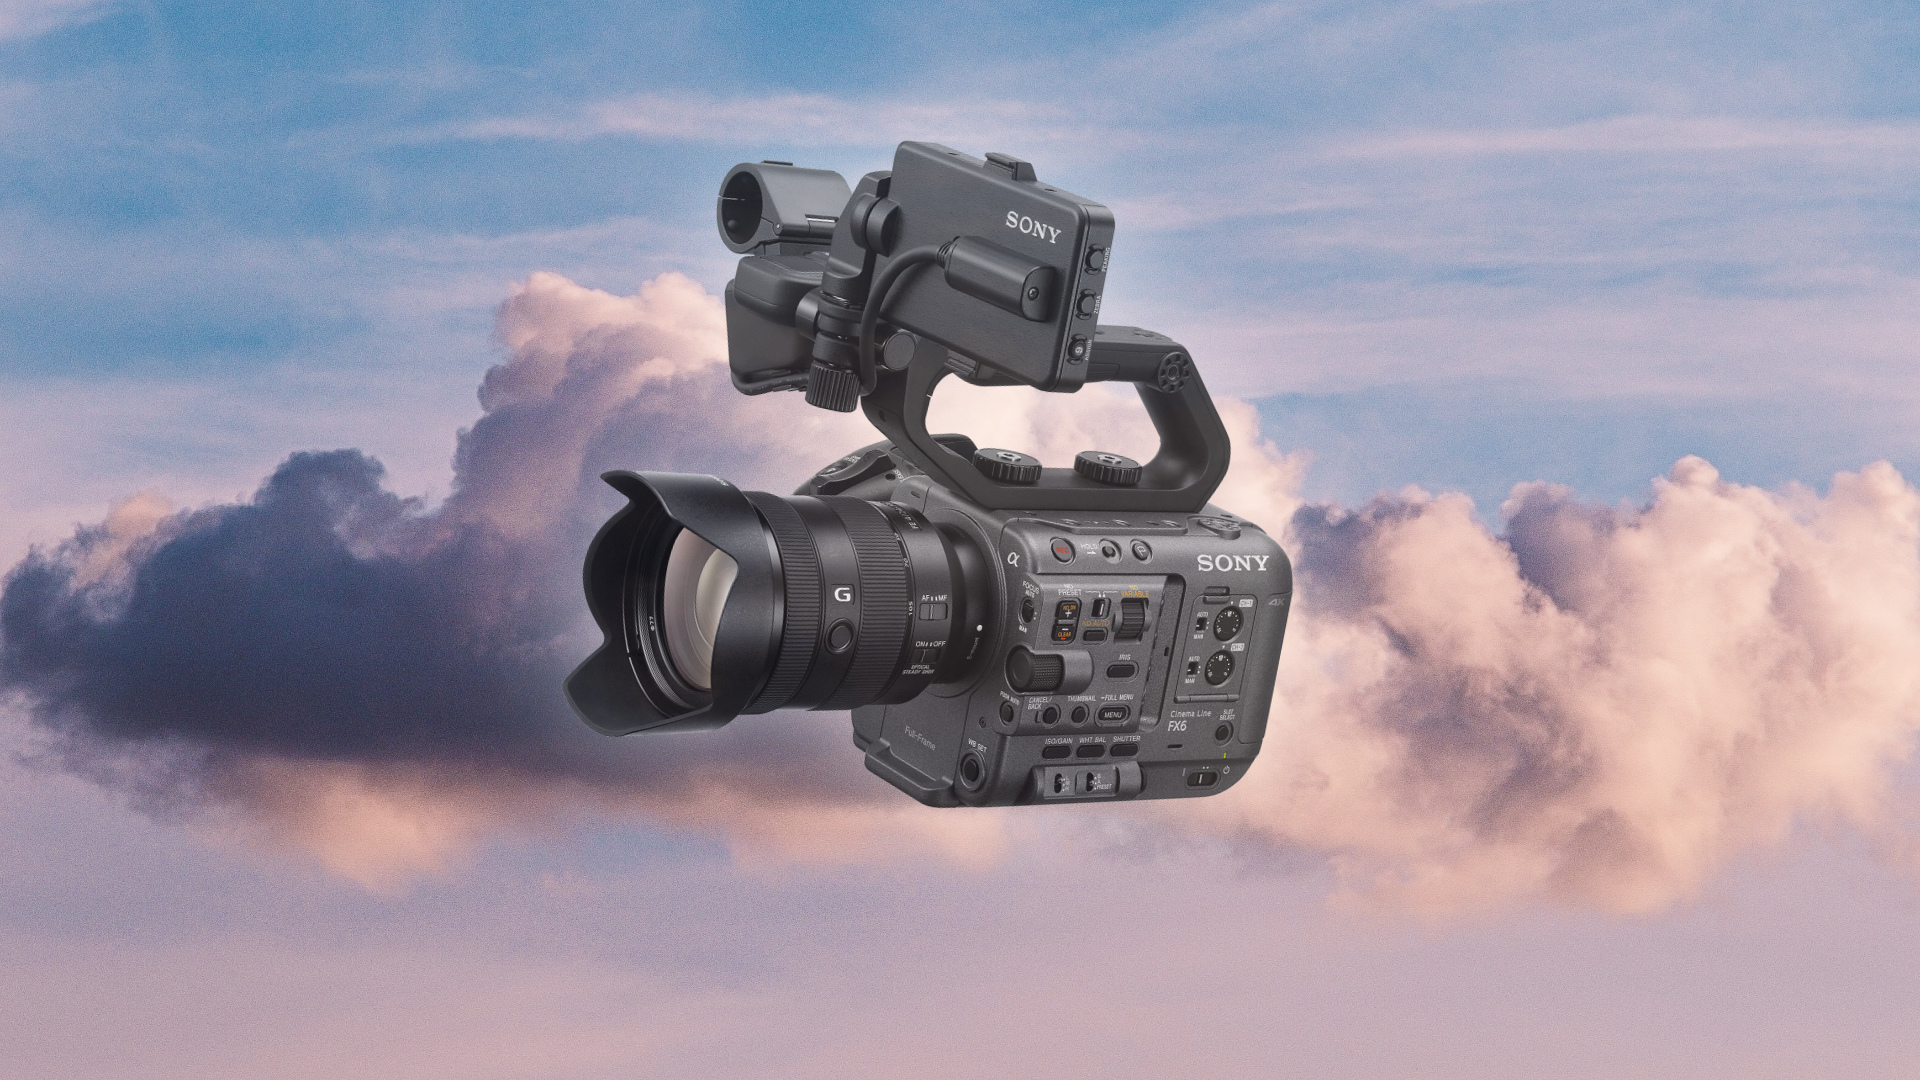 Sony Sony FX6 Digital Cinema Camera Kit with 24-105mm Lens… - Moment